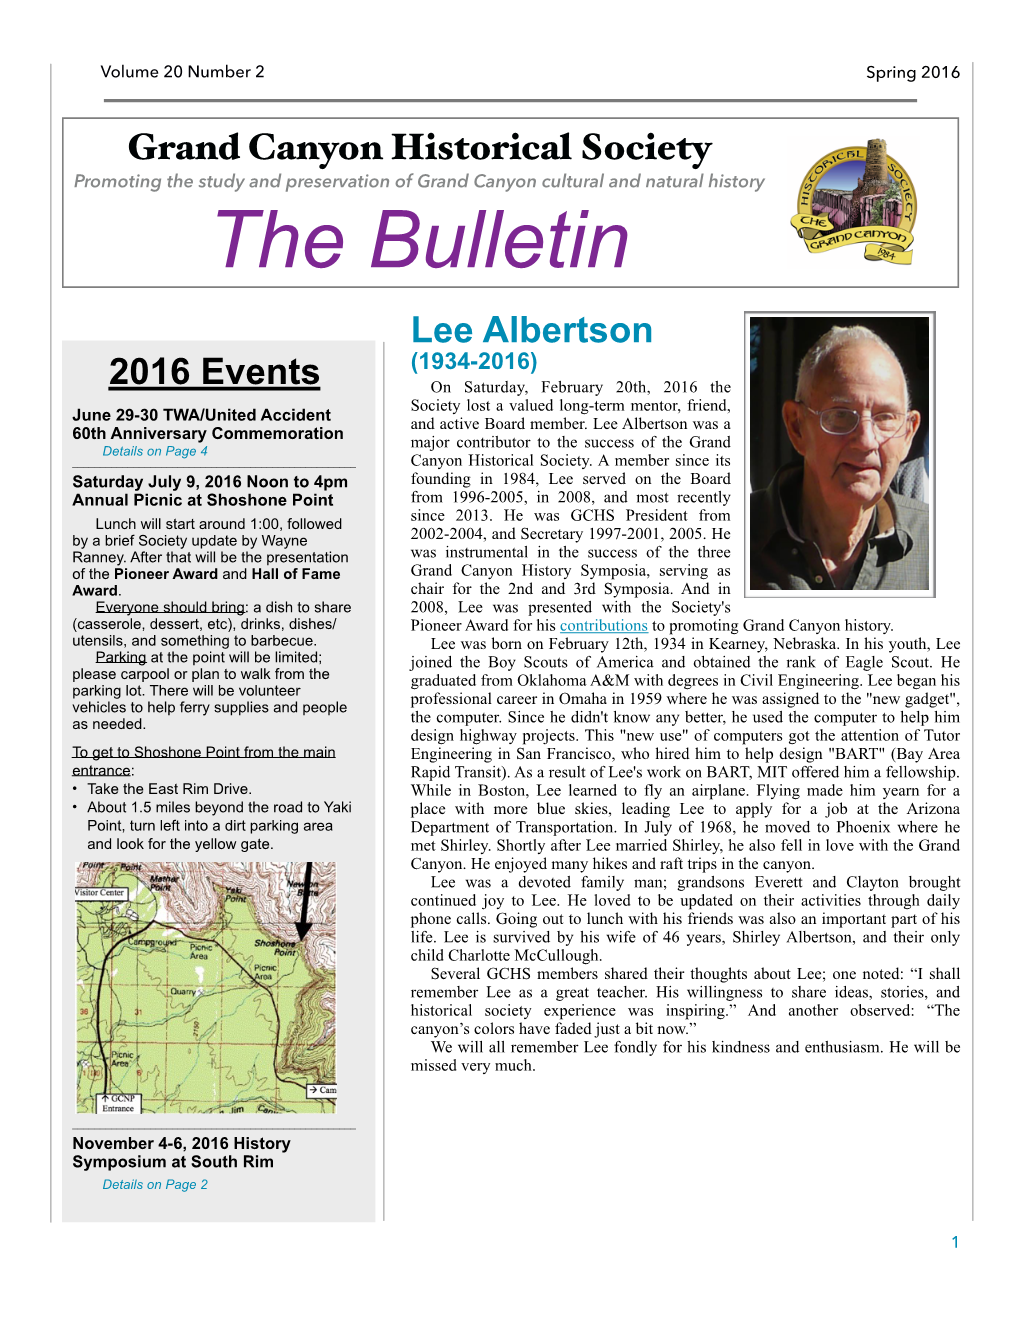 Spring 2016 Bulletin